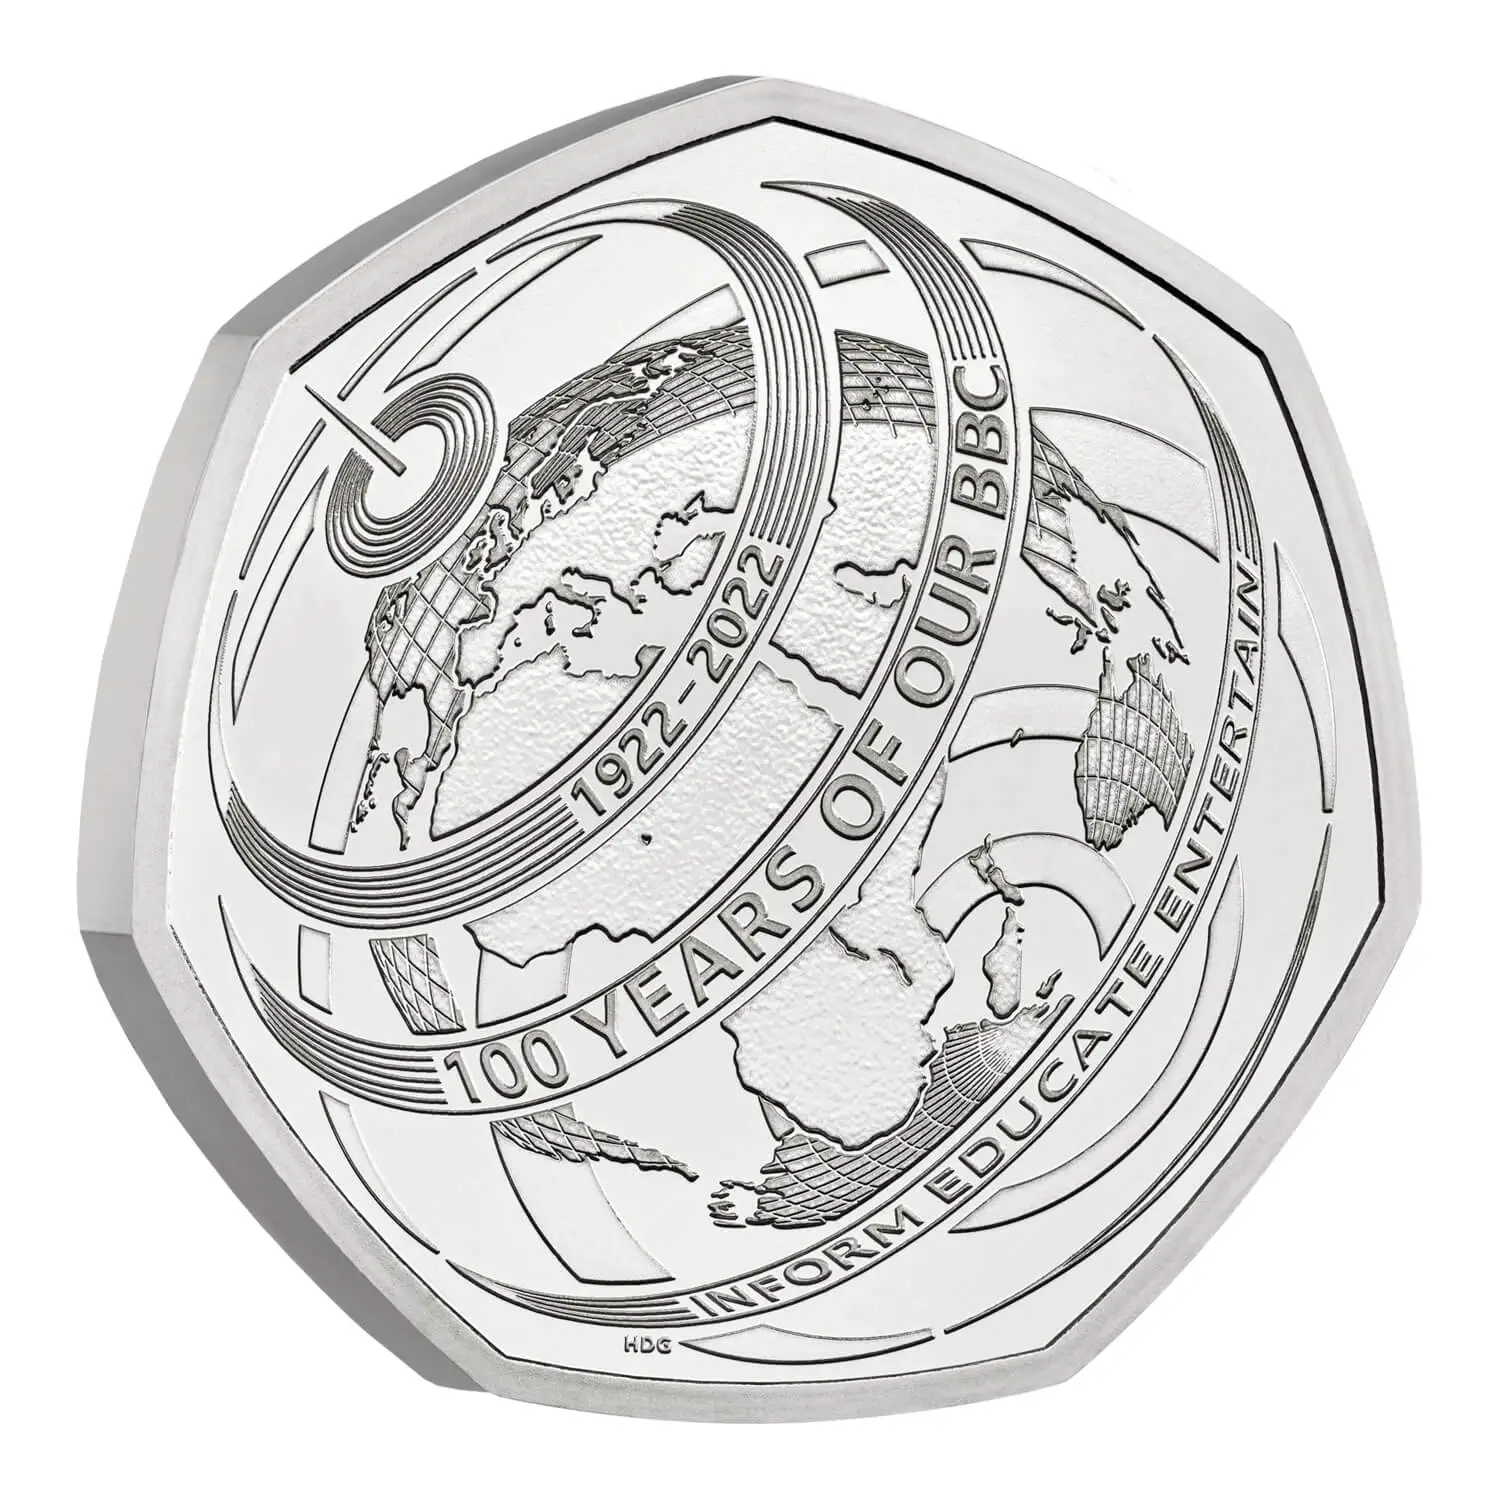 BBC 50p coin reverse